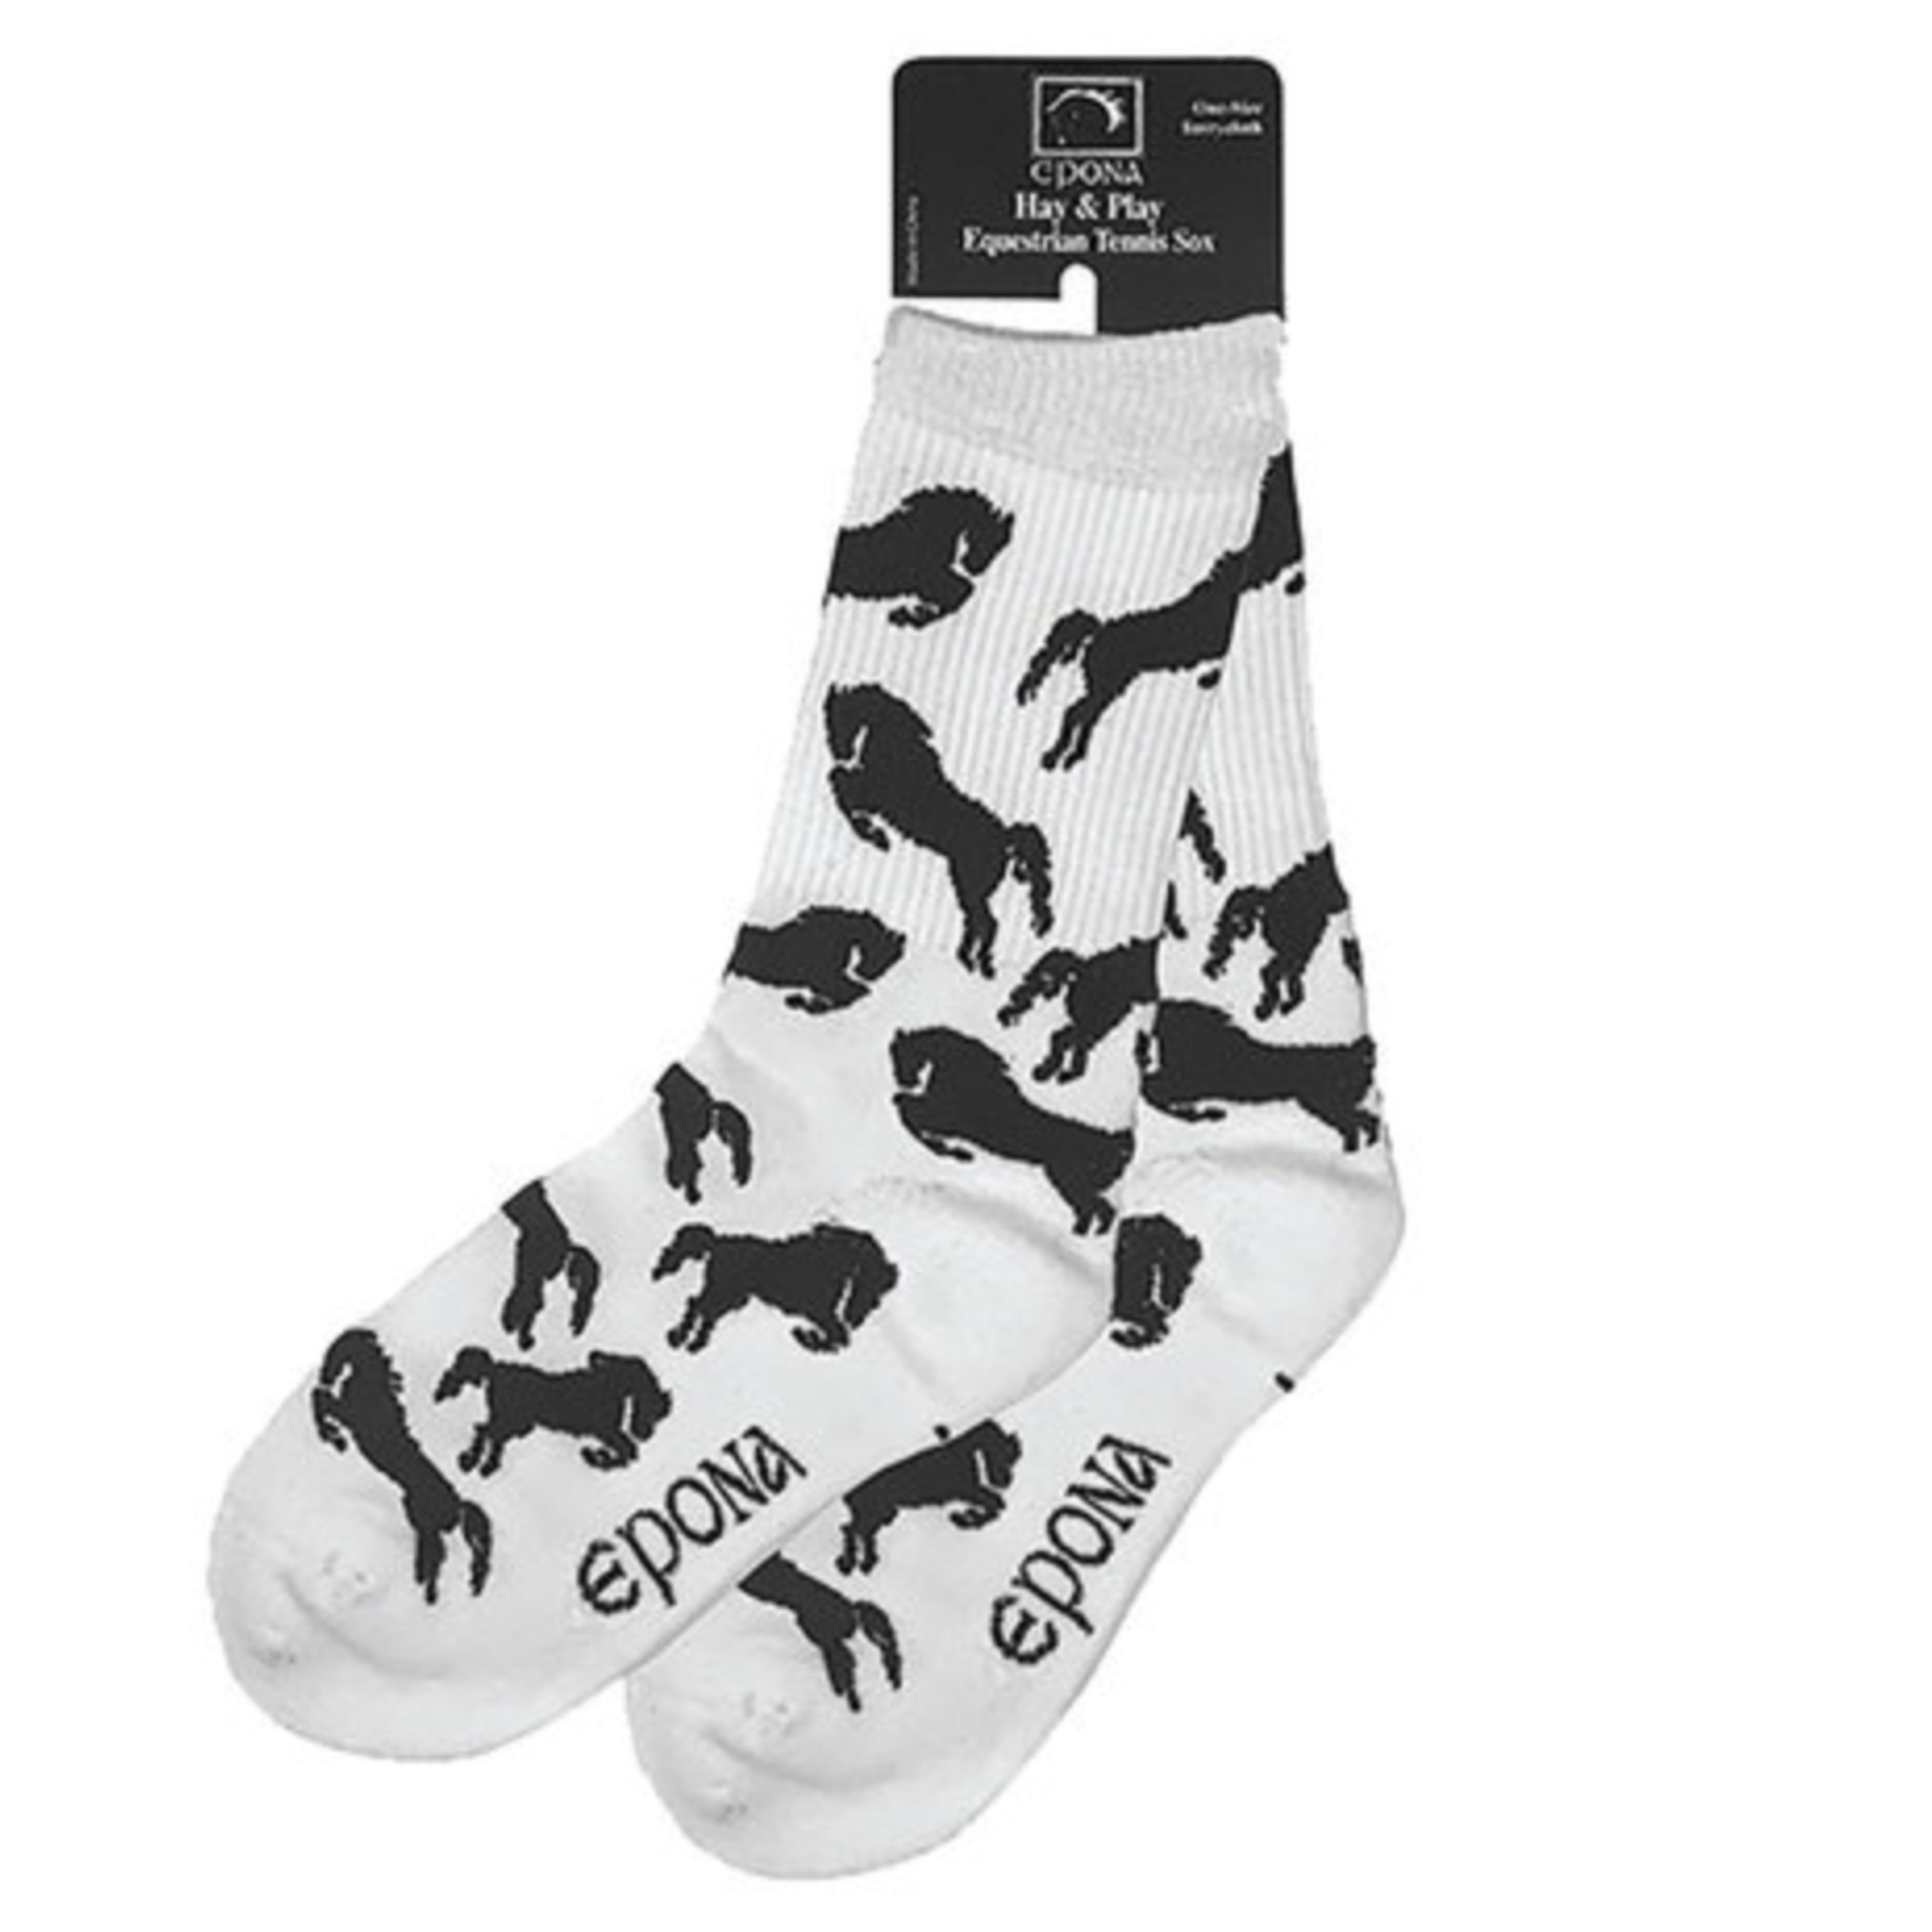 Epona Equestrian Tennis Socks